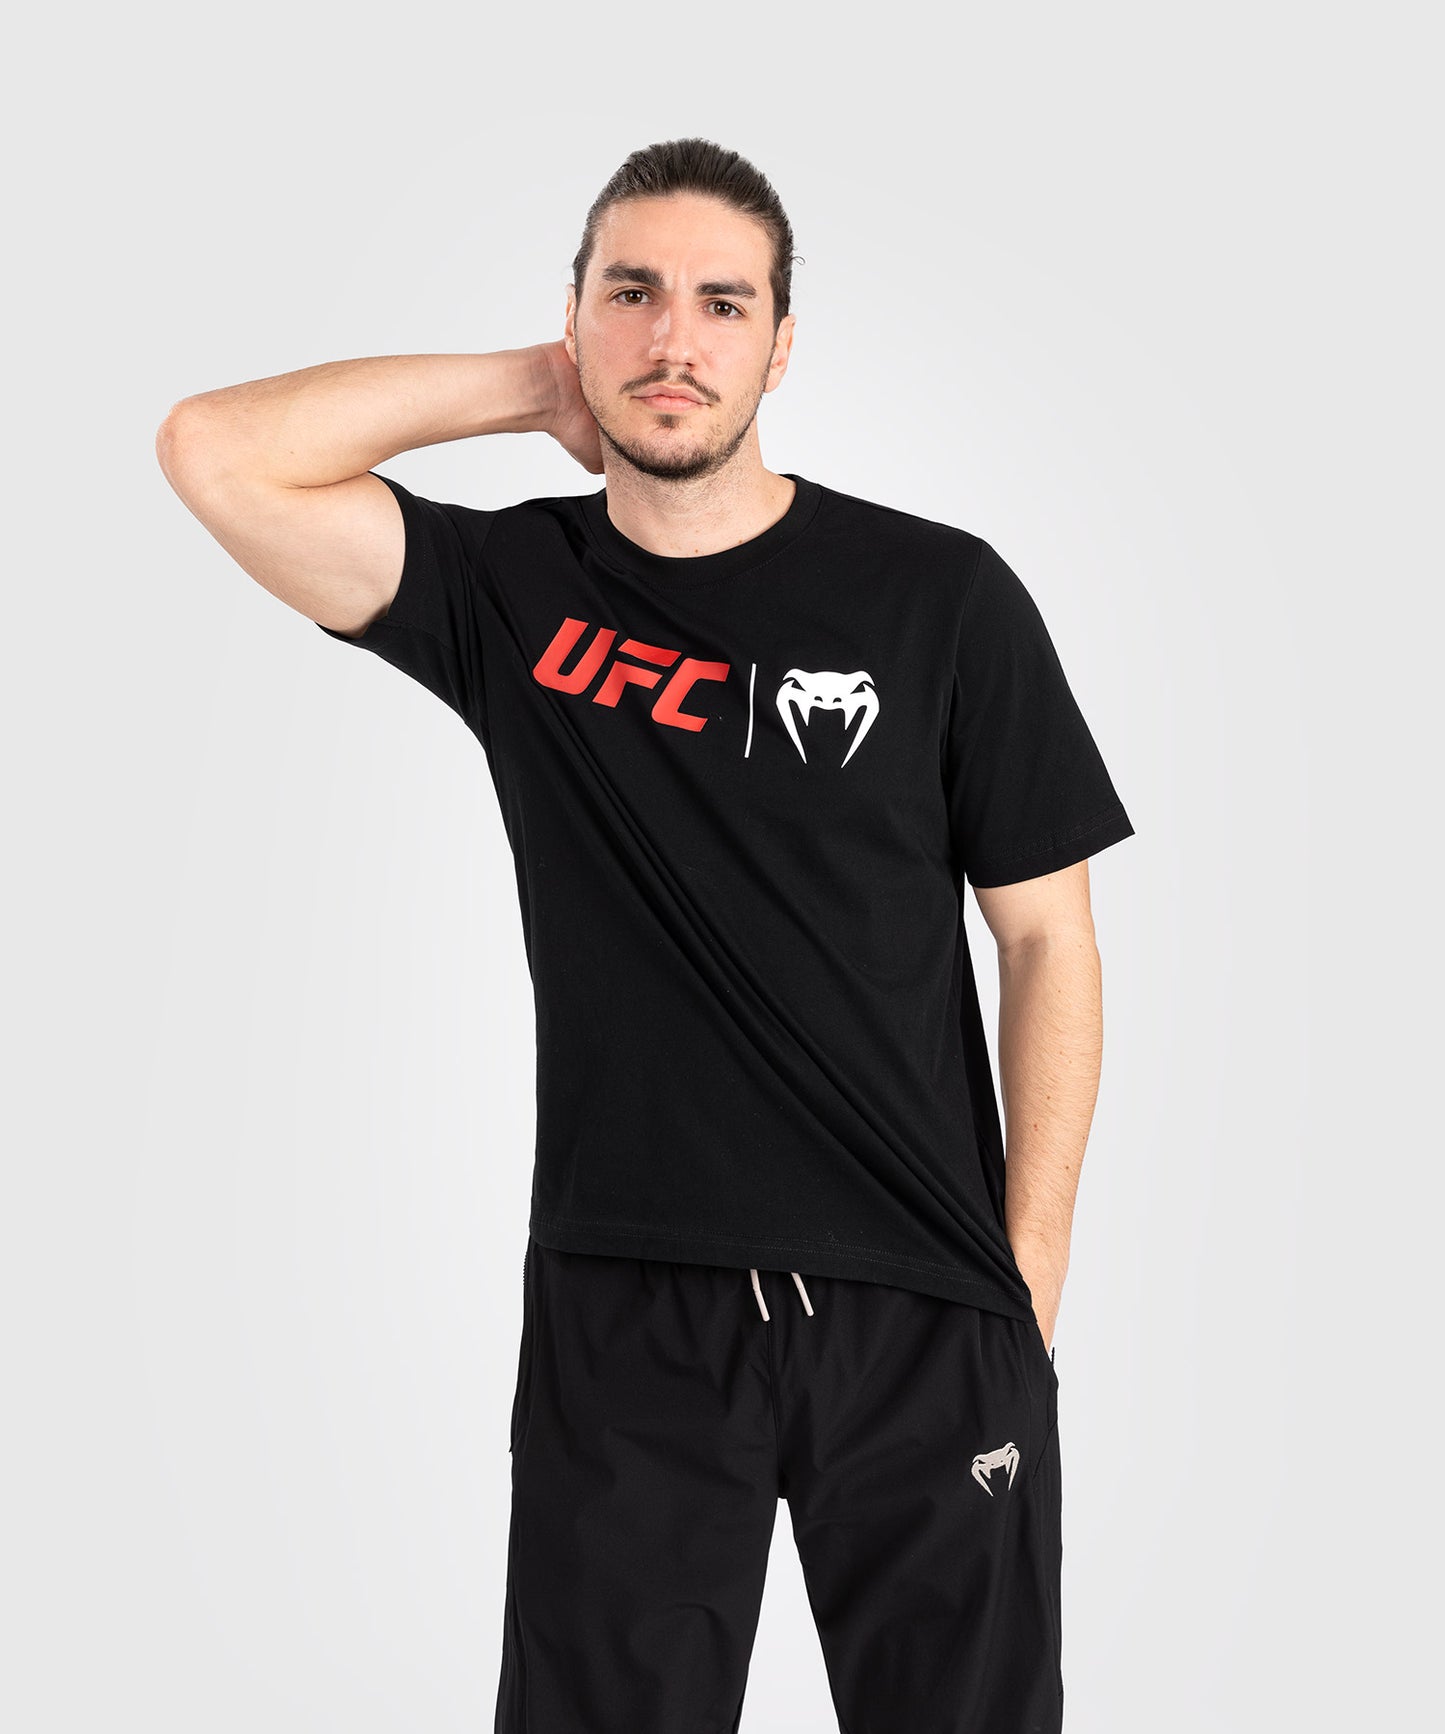 UFC Venum Classic T-Shirt - Black/Red